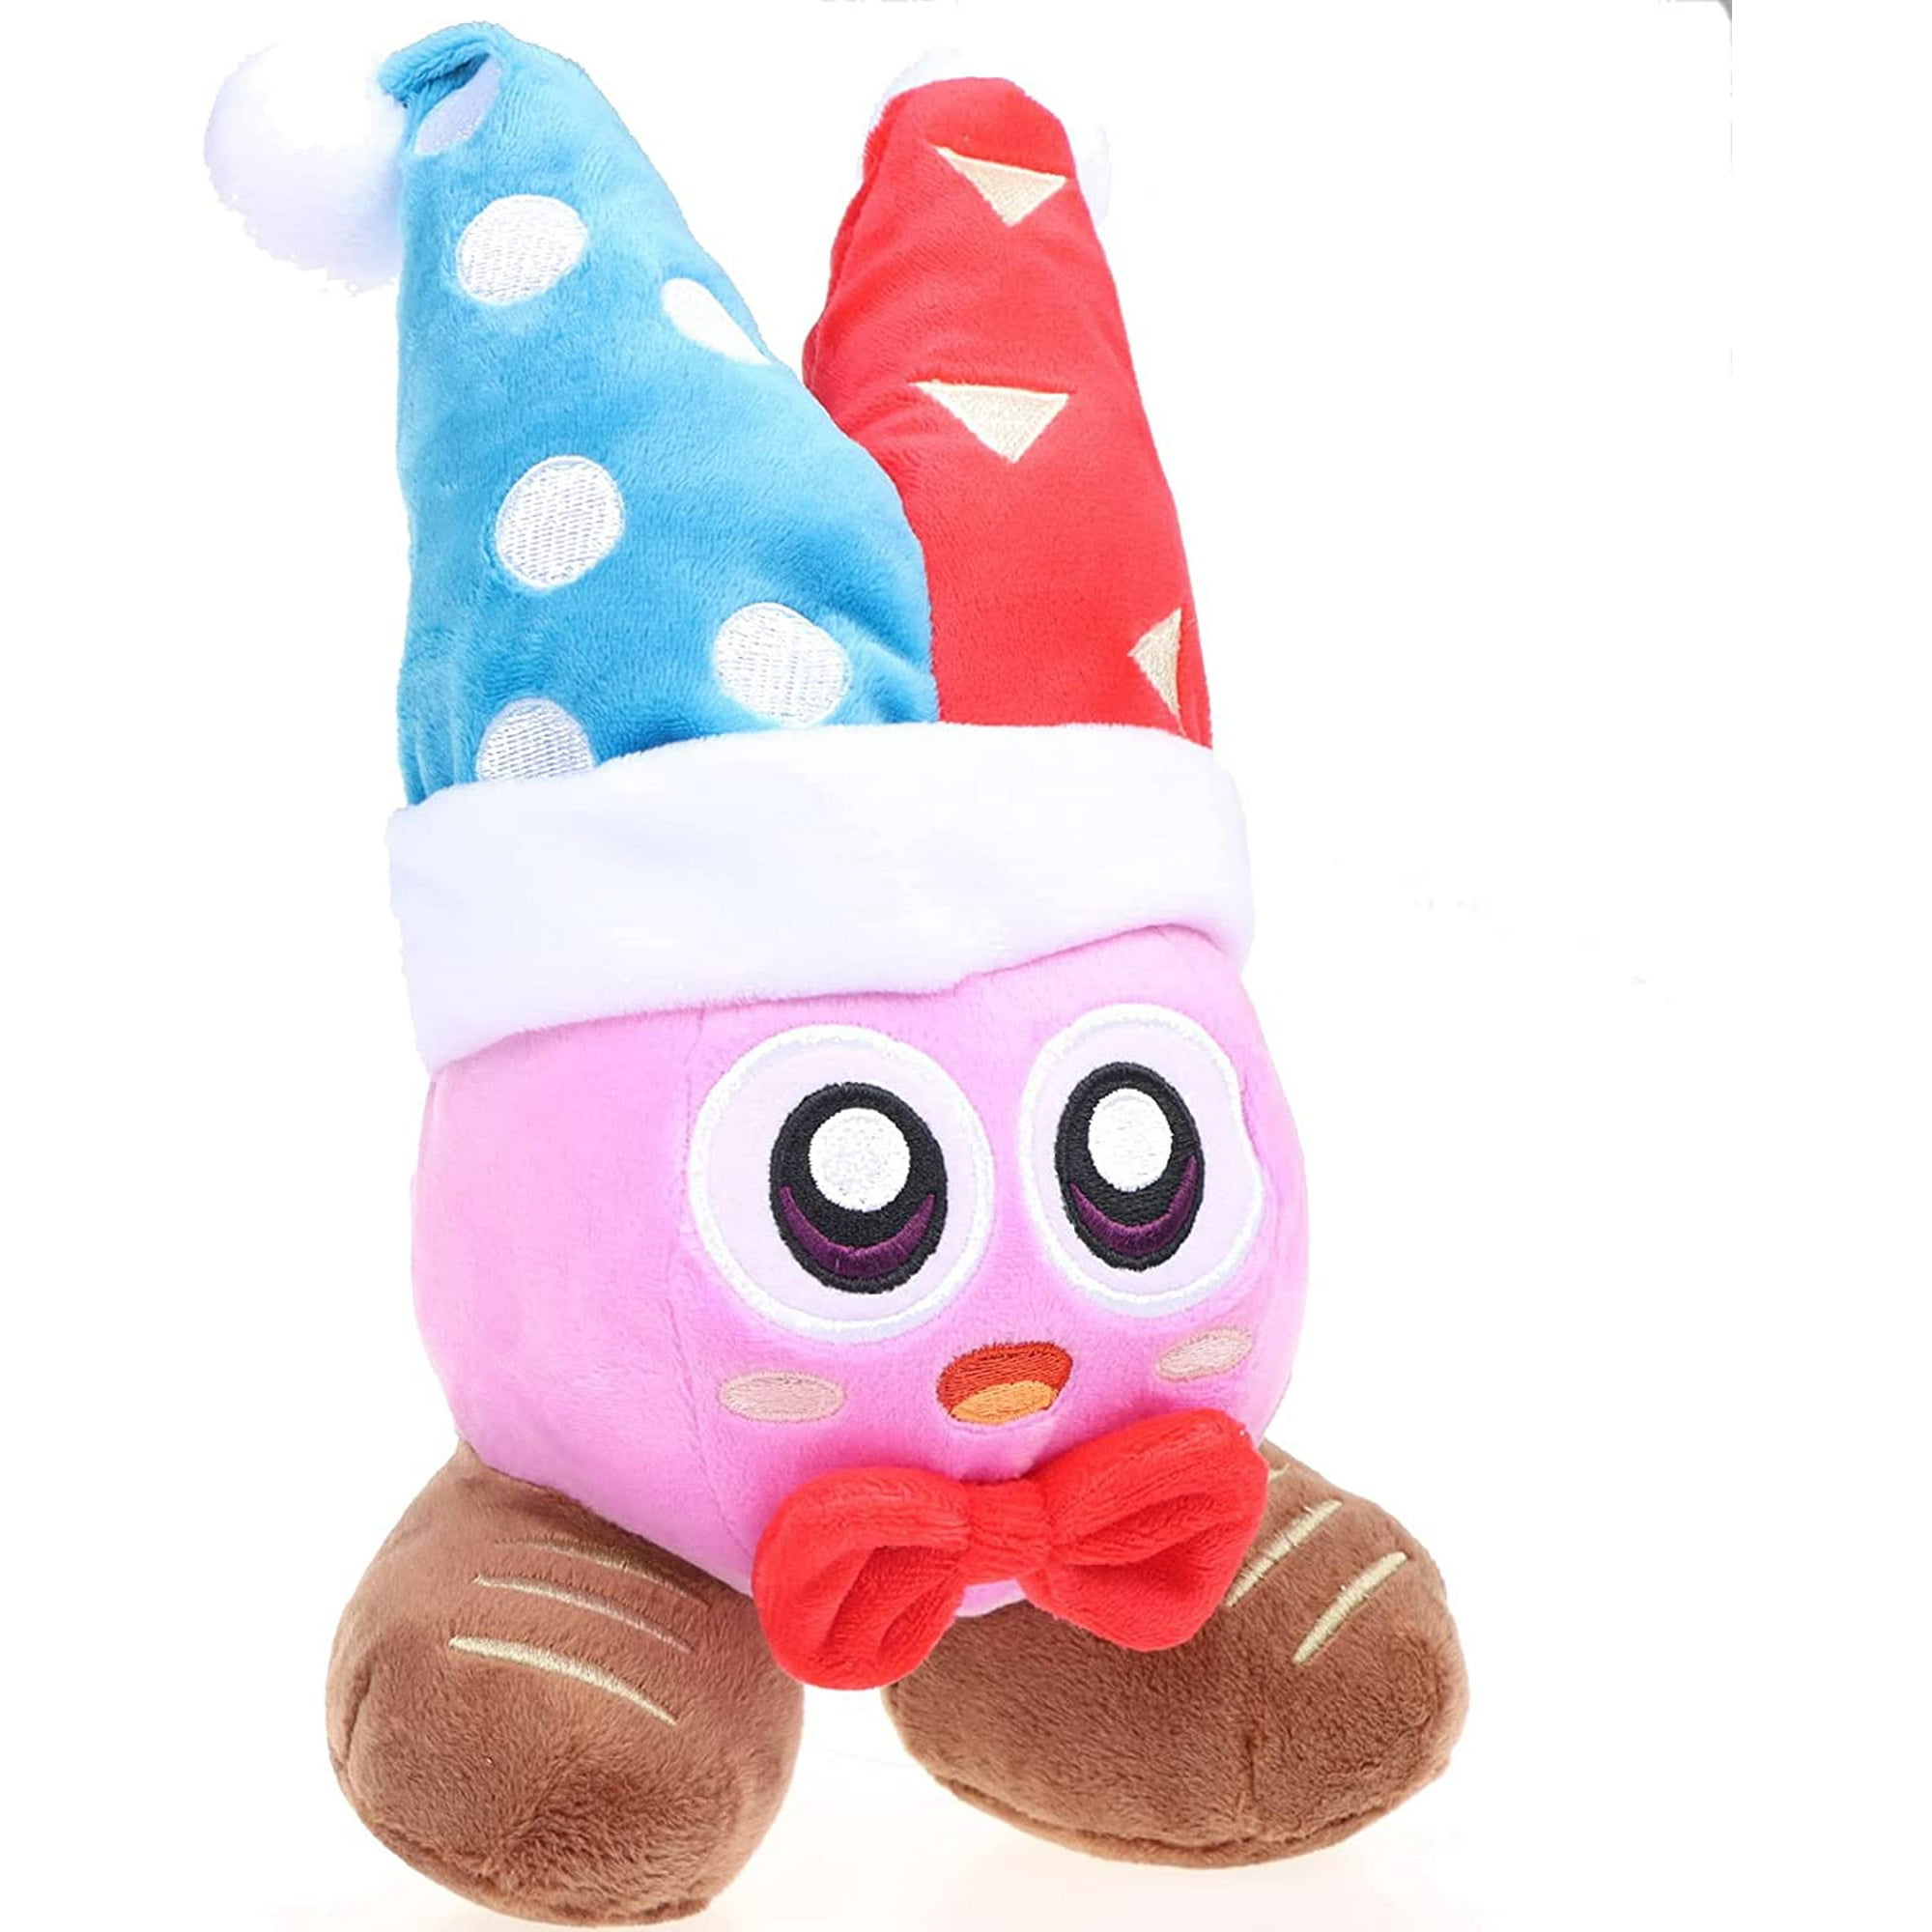 Peluche Kirby Original: Compra Online en Oferta